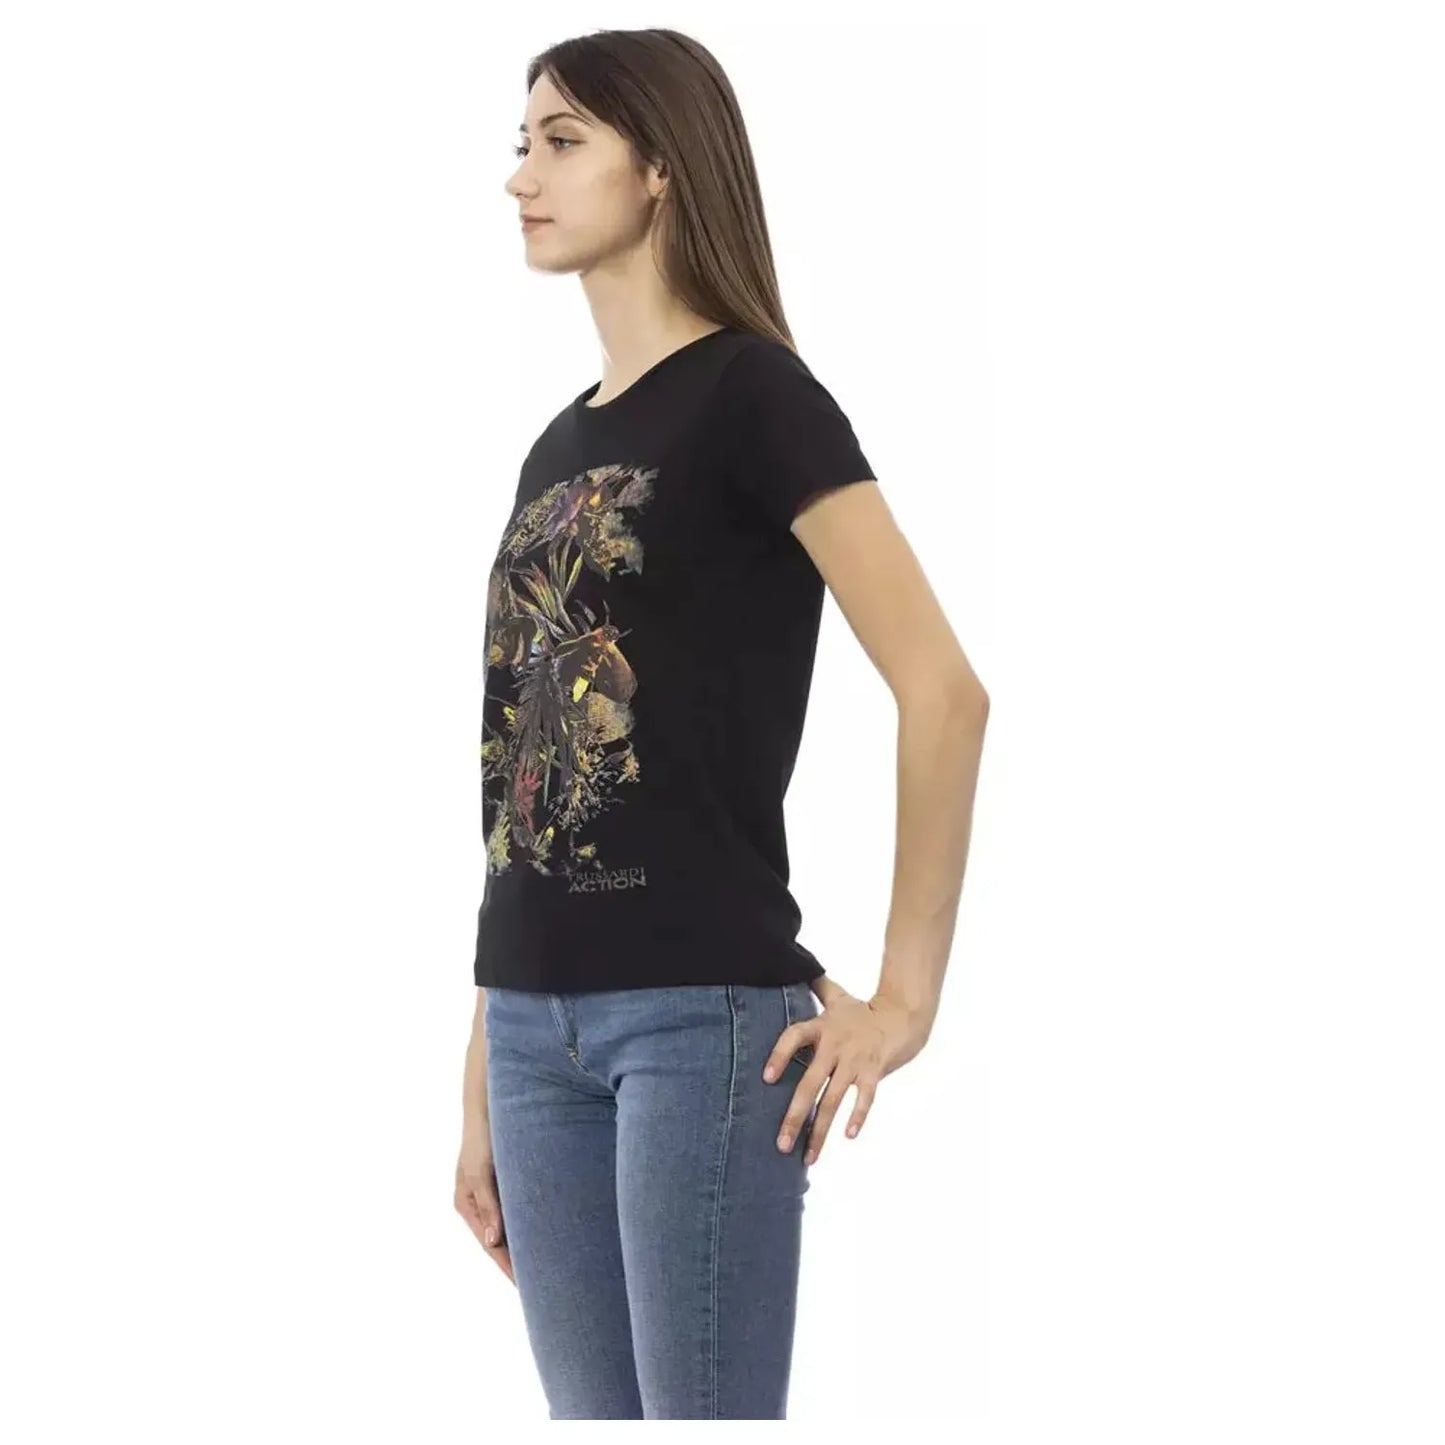 Trussardi Action Elegant Short Sleeve Couture Tee black-cotton-tops-t-shirt-15 product-23036-15651237-19-12a012f7-373.webp